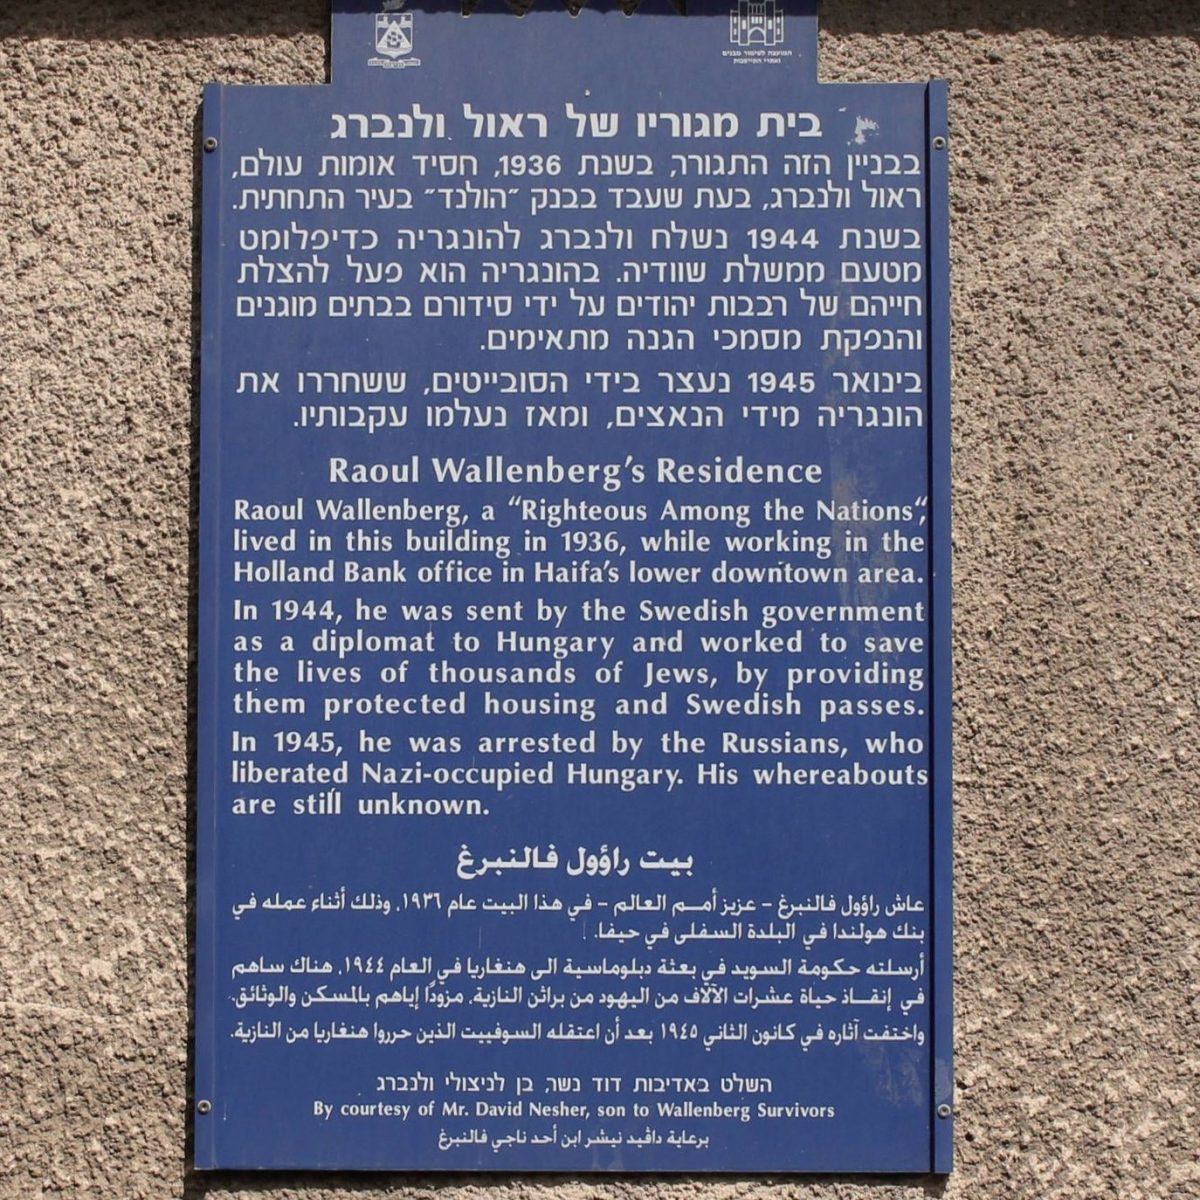 Memorial board on the Raoul Wallenberg's house in Haifa, Israel